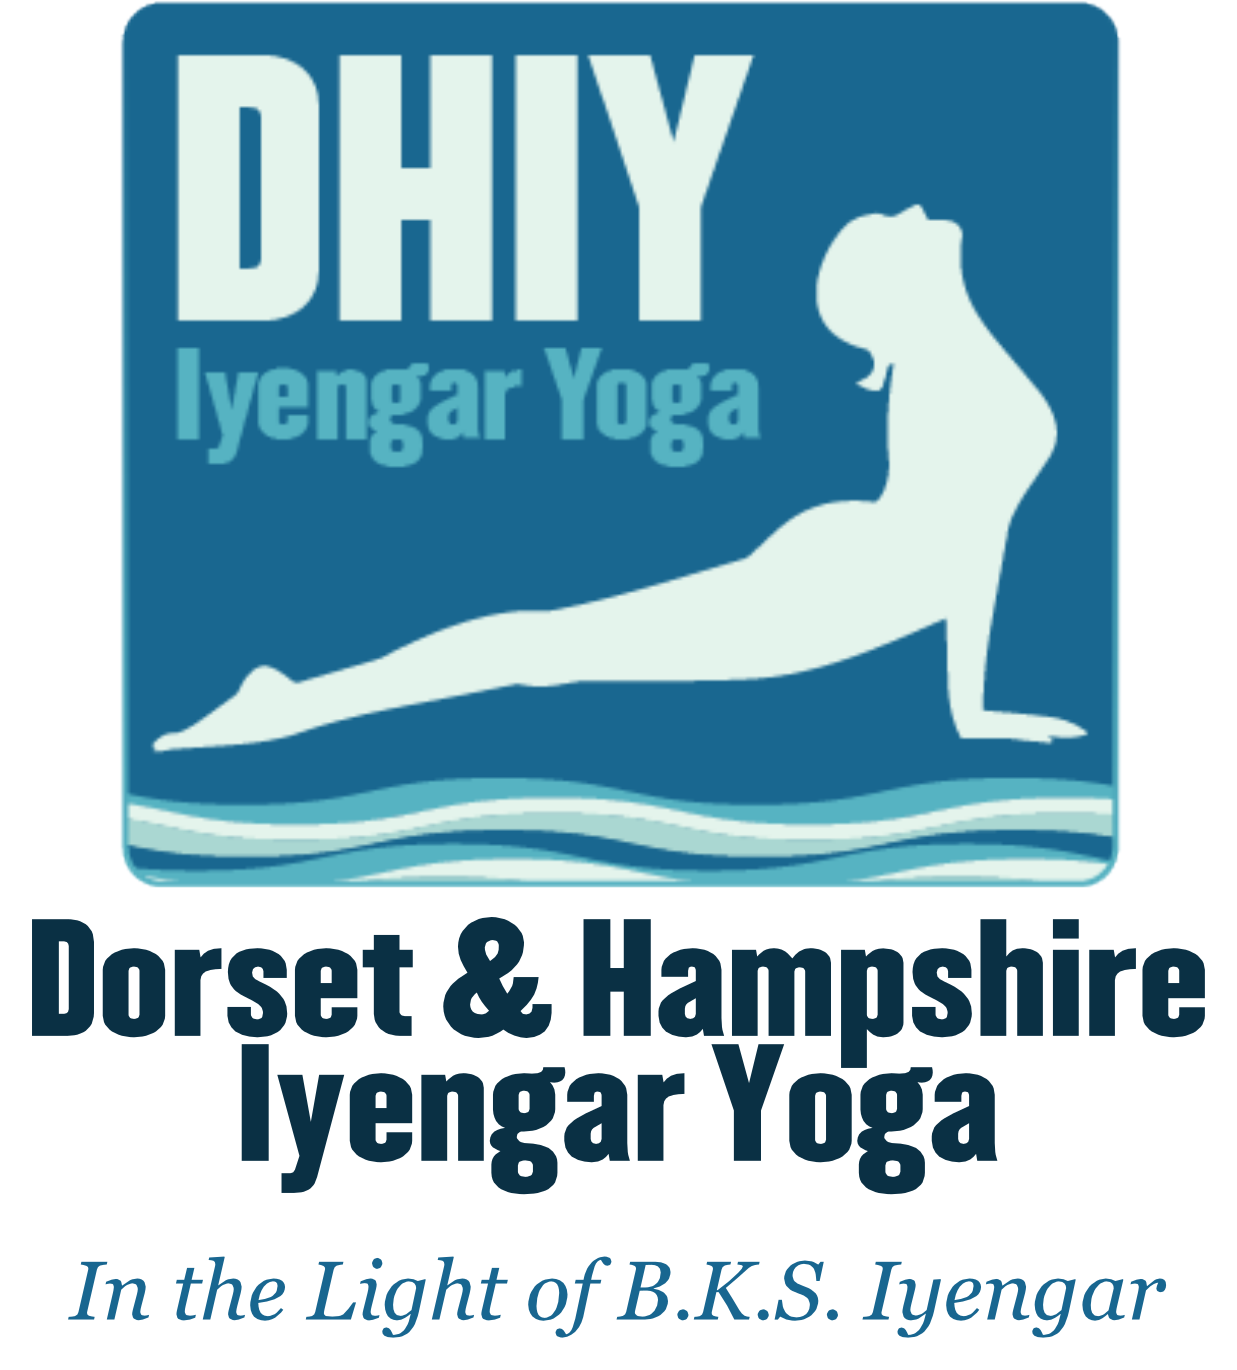 Dorset & Hampshire Iyengar Yoga